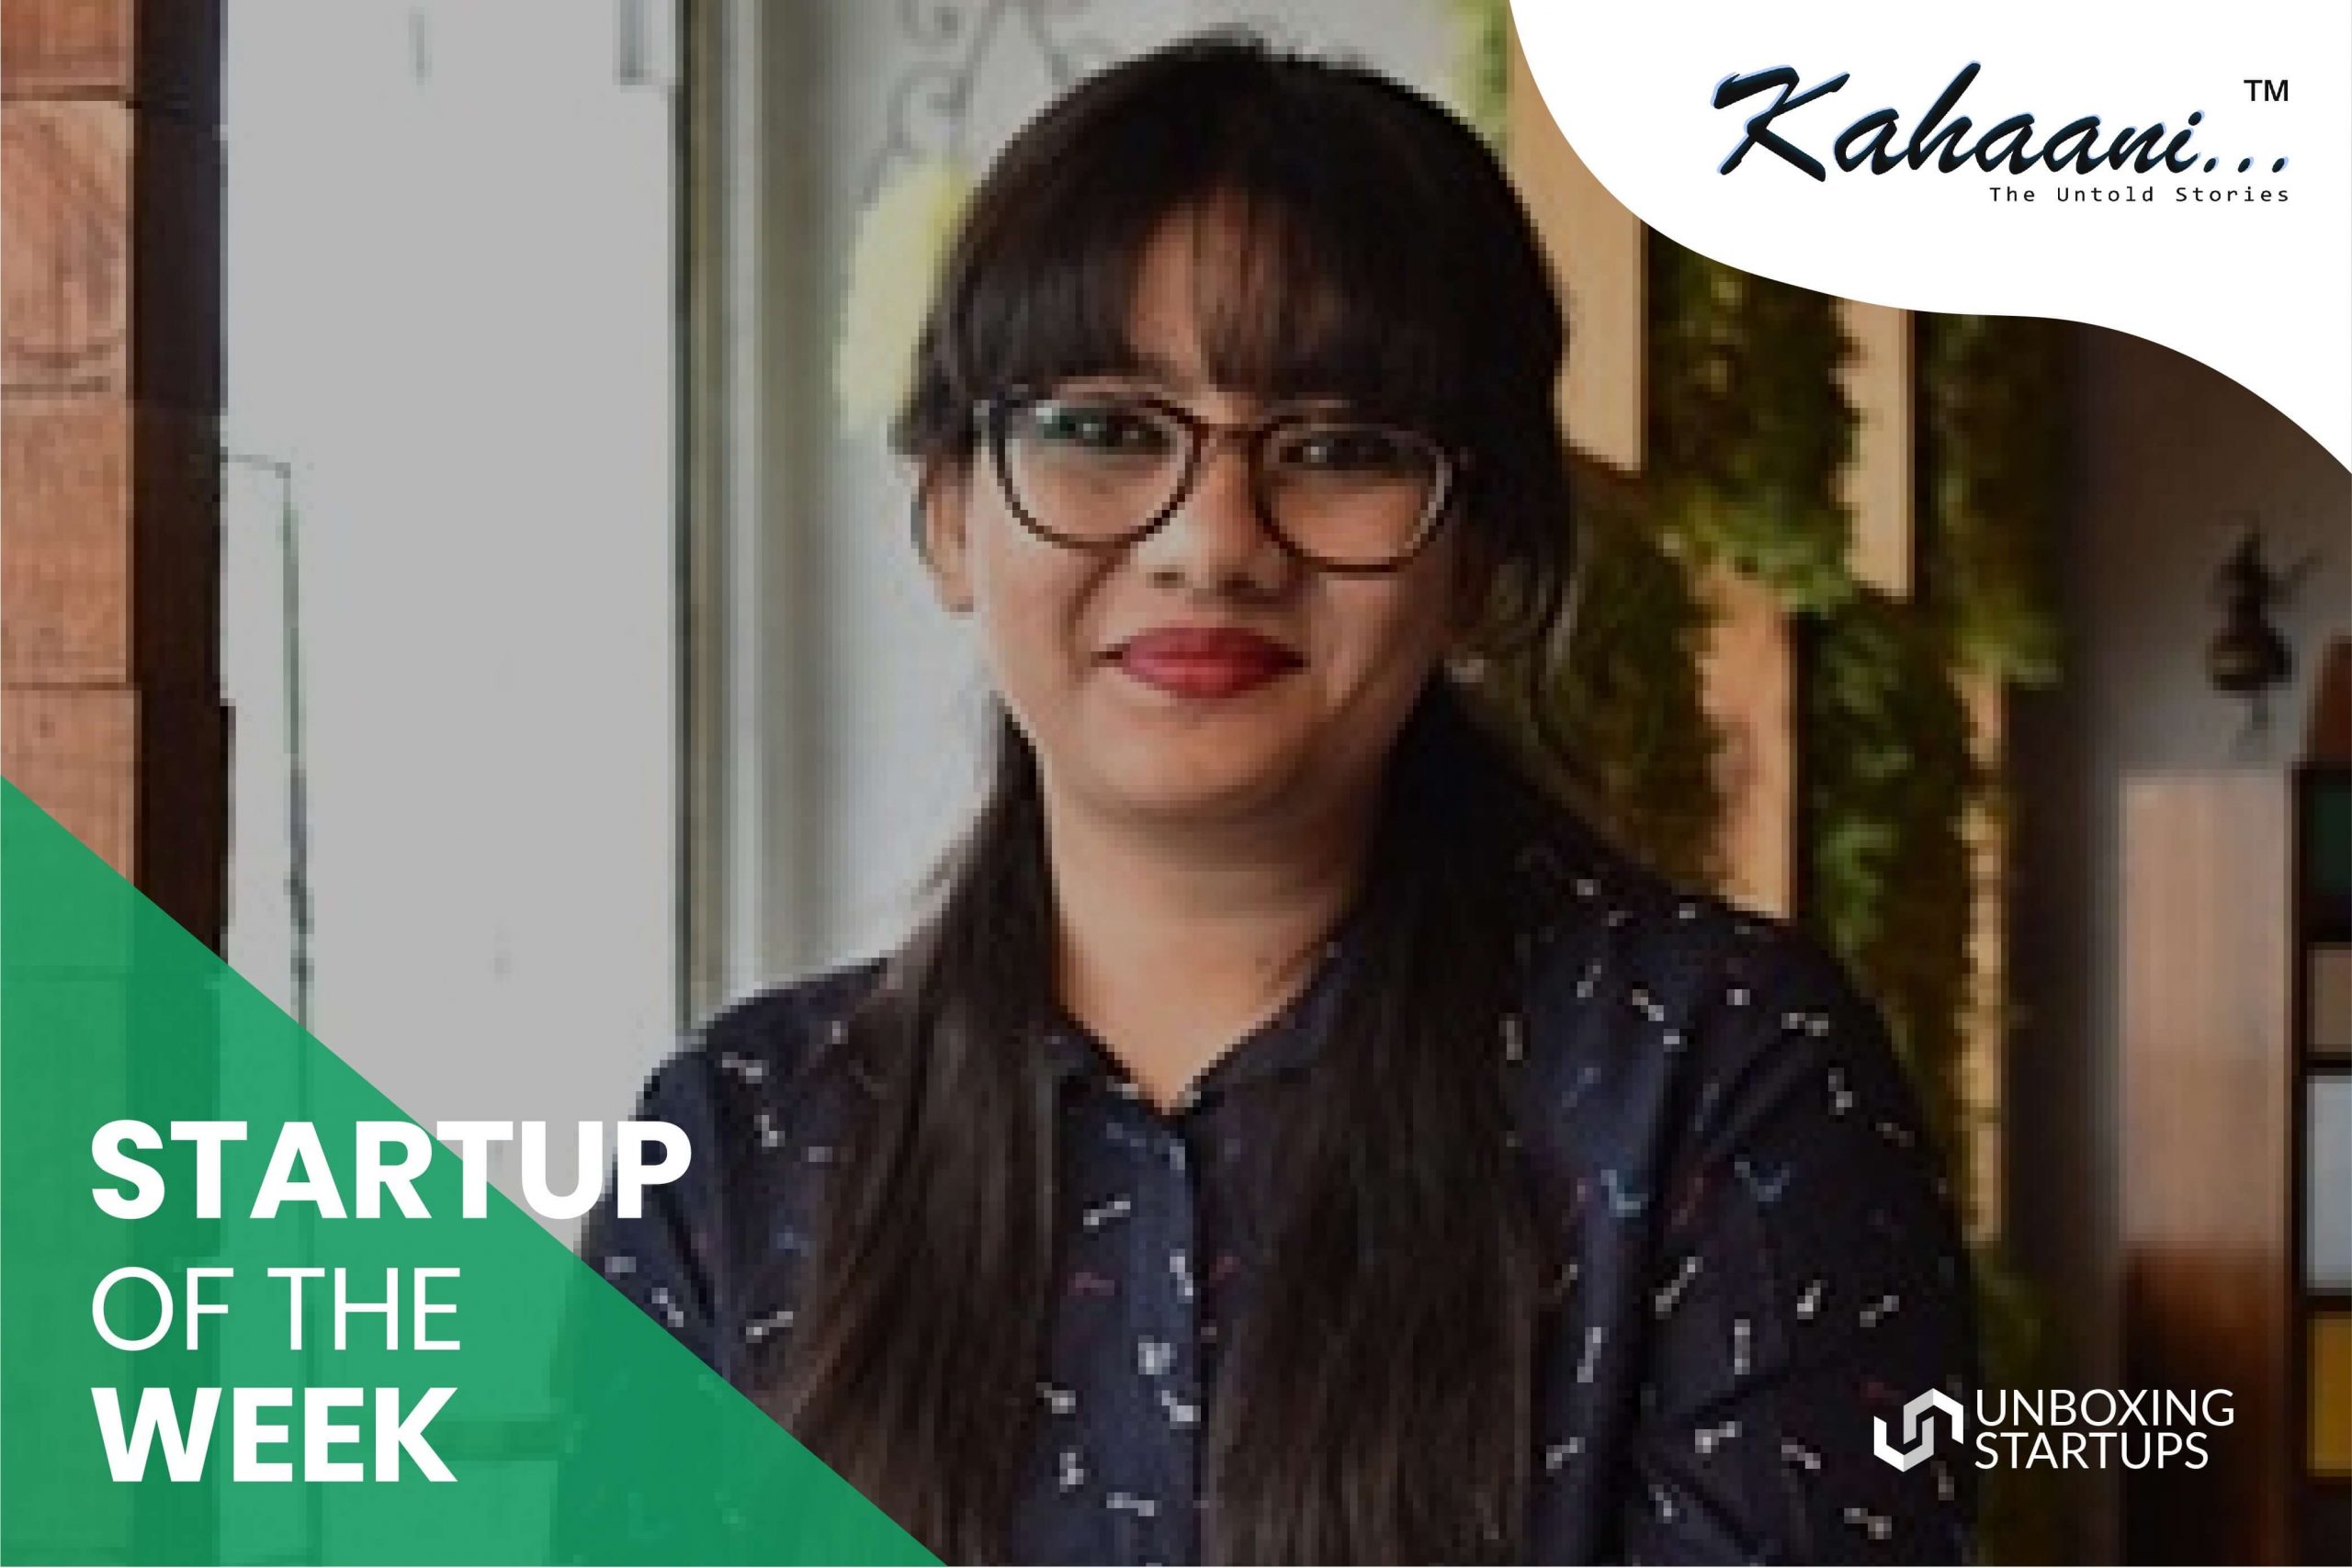 Kahaani startup of the week